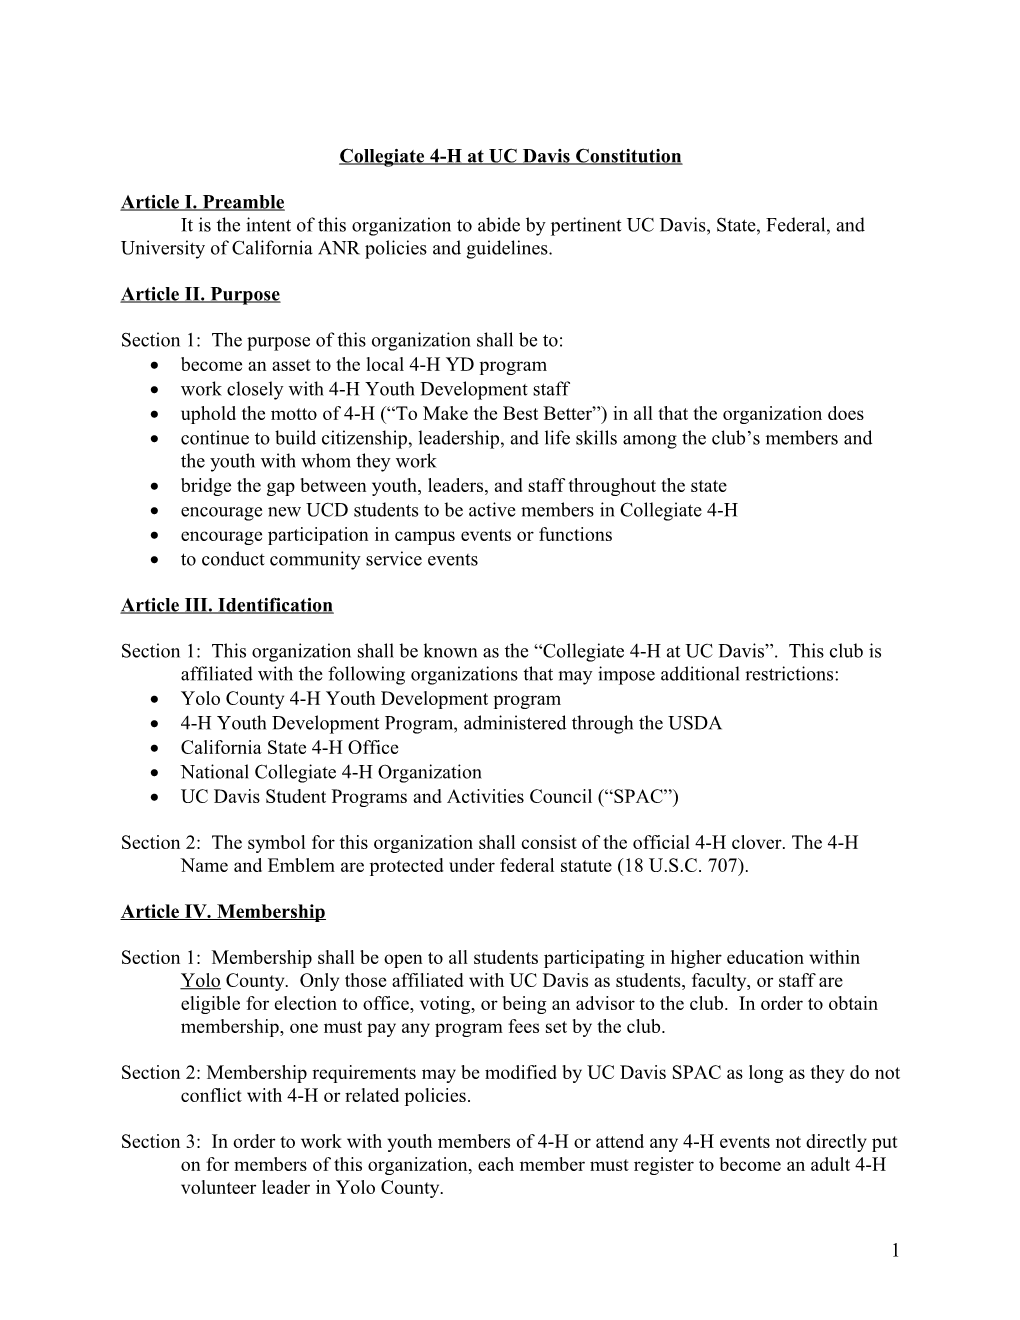 California Collegiate 4-H Proposal